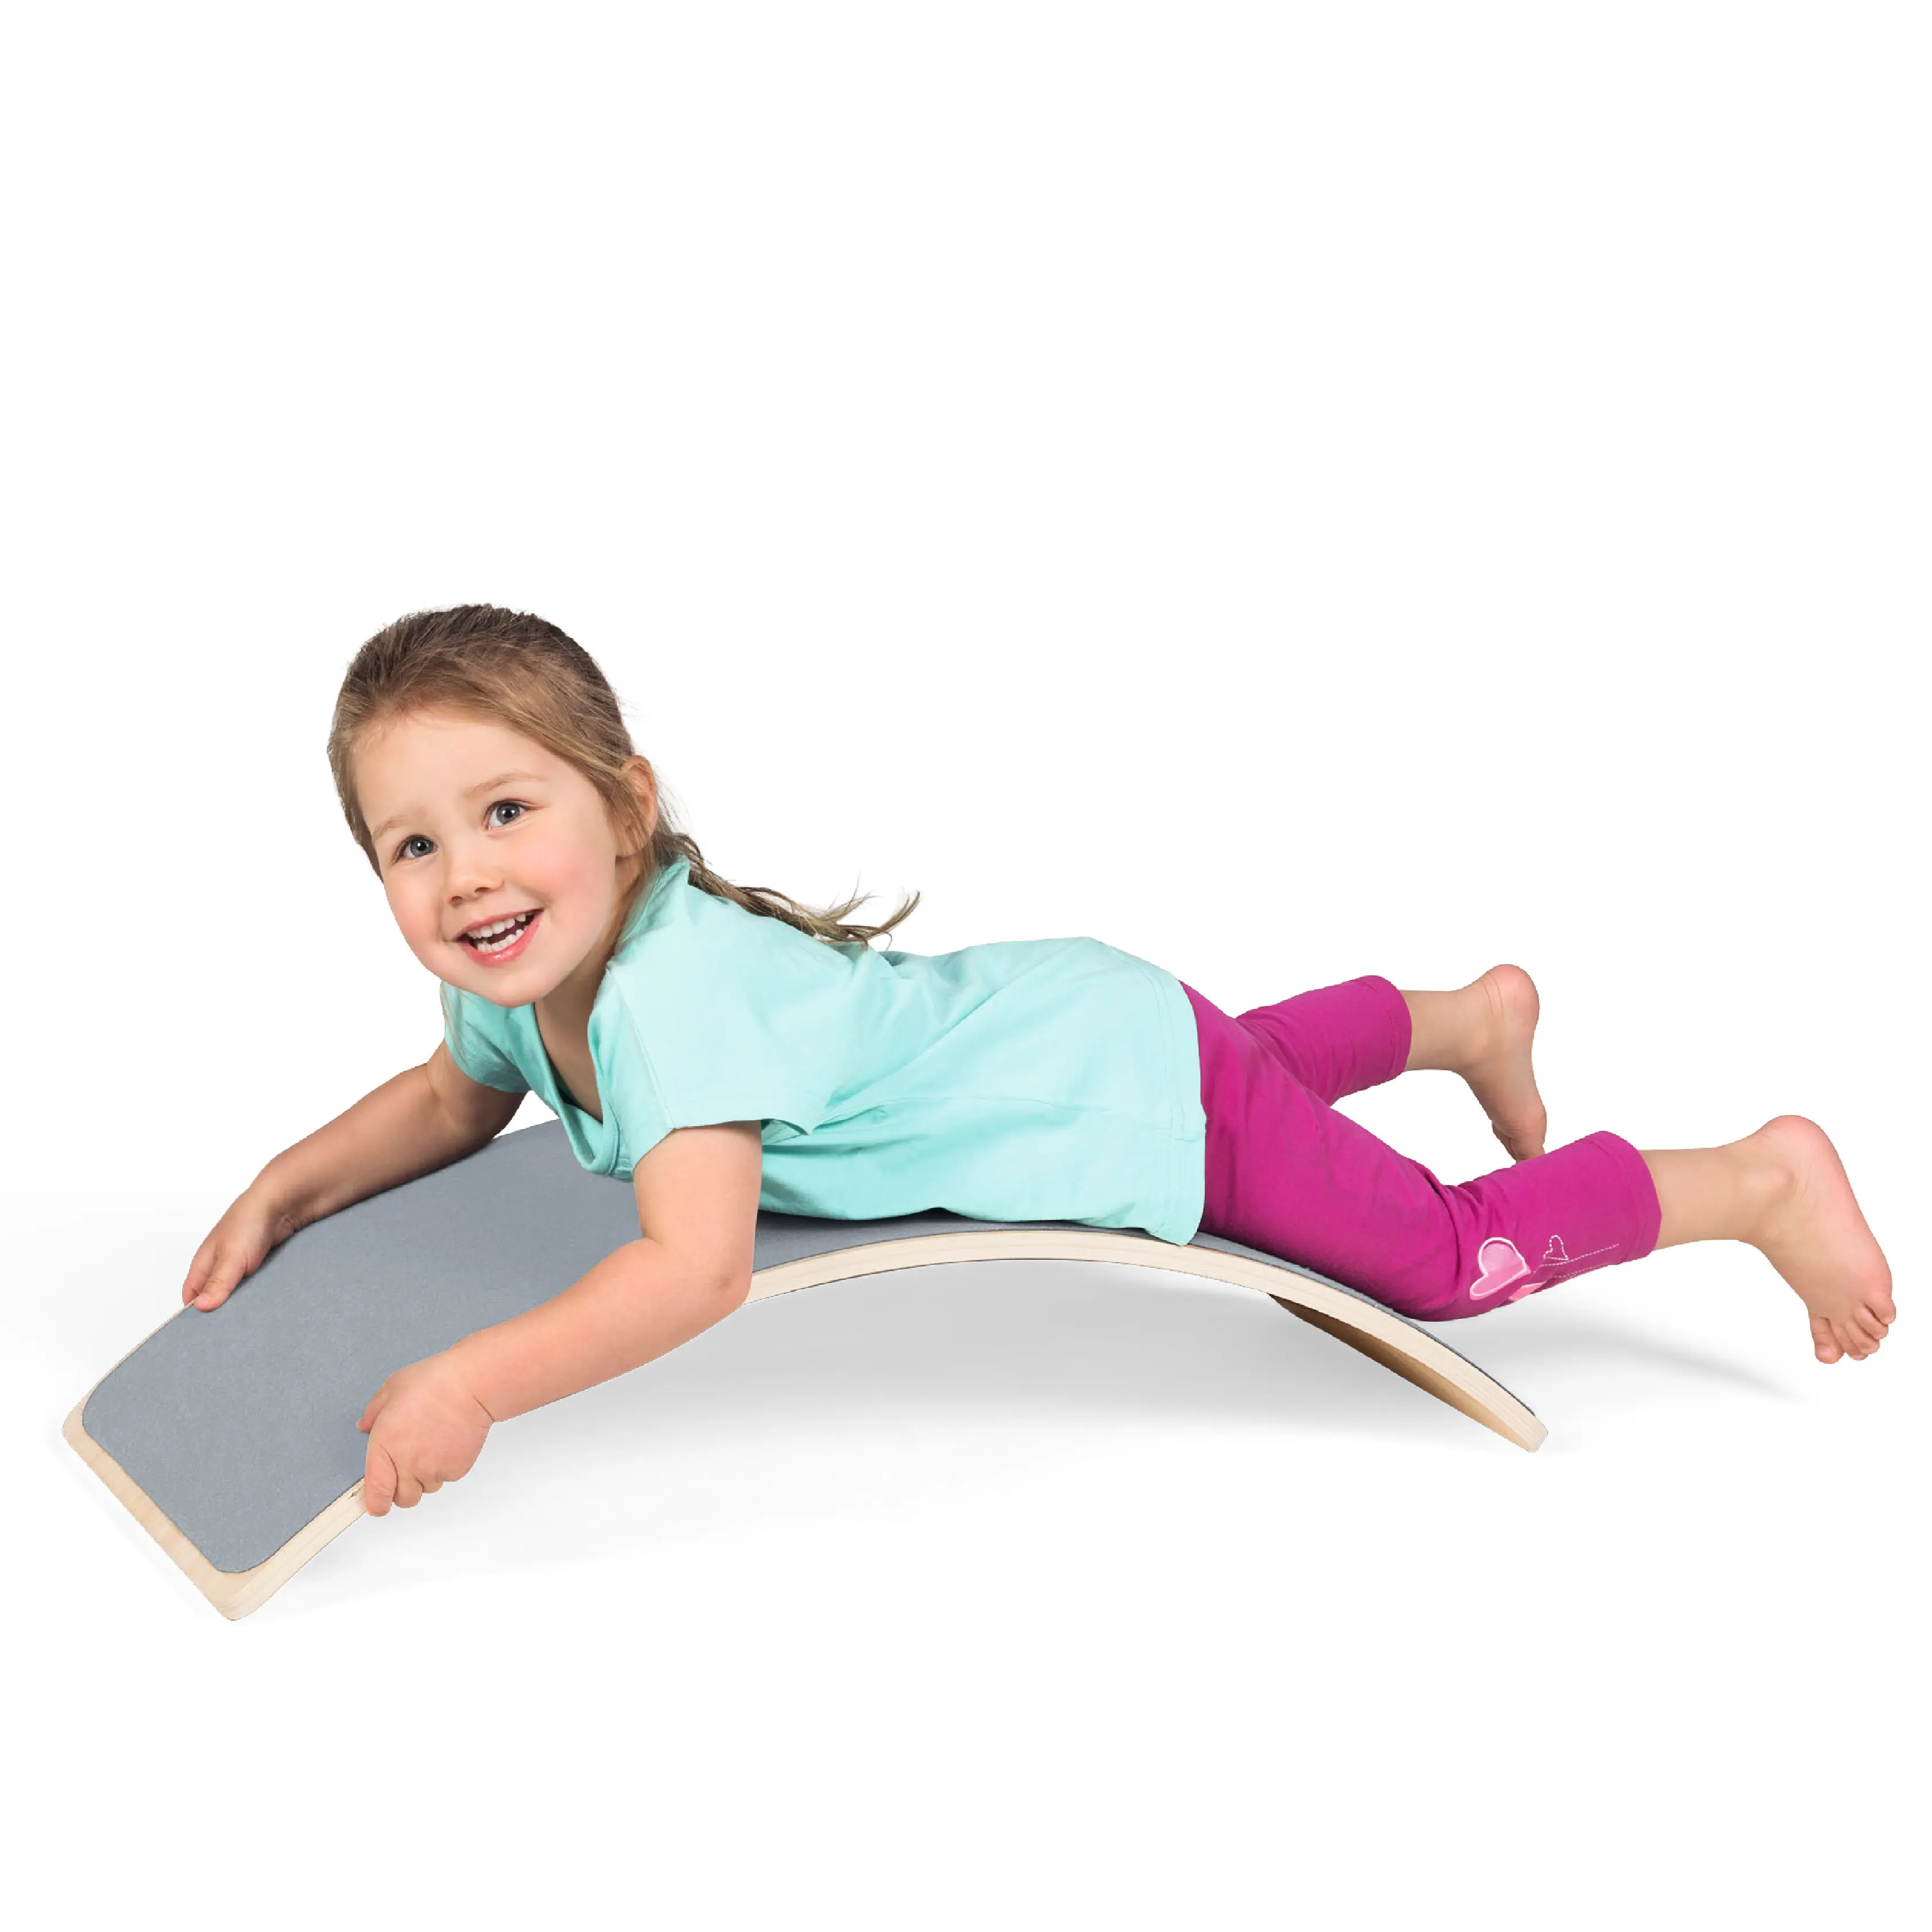 Montessori curvy Teaching Educational Playing kids yoga fitness wobble wooden balance board